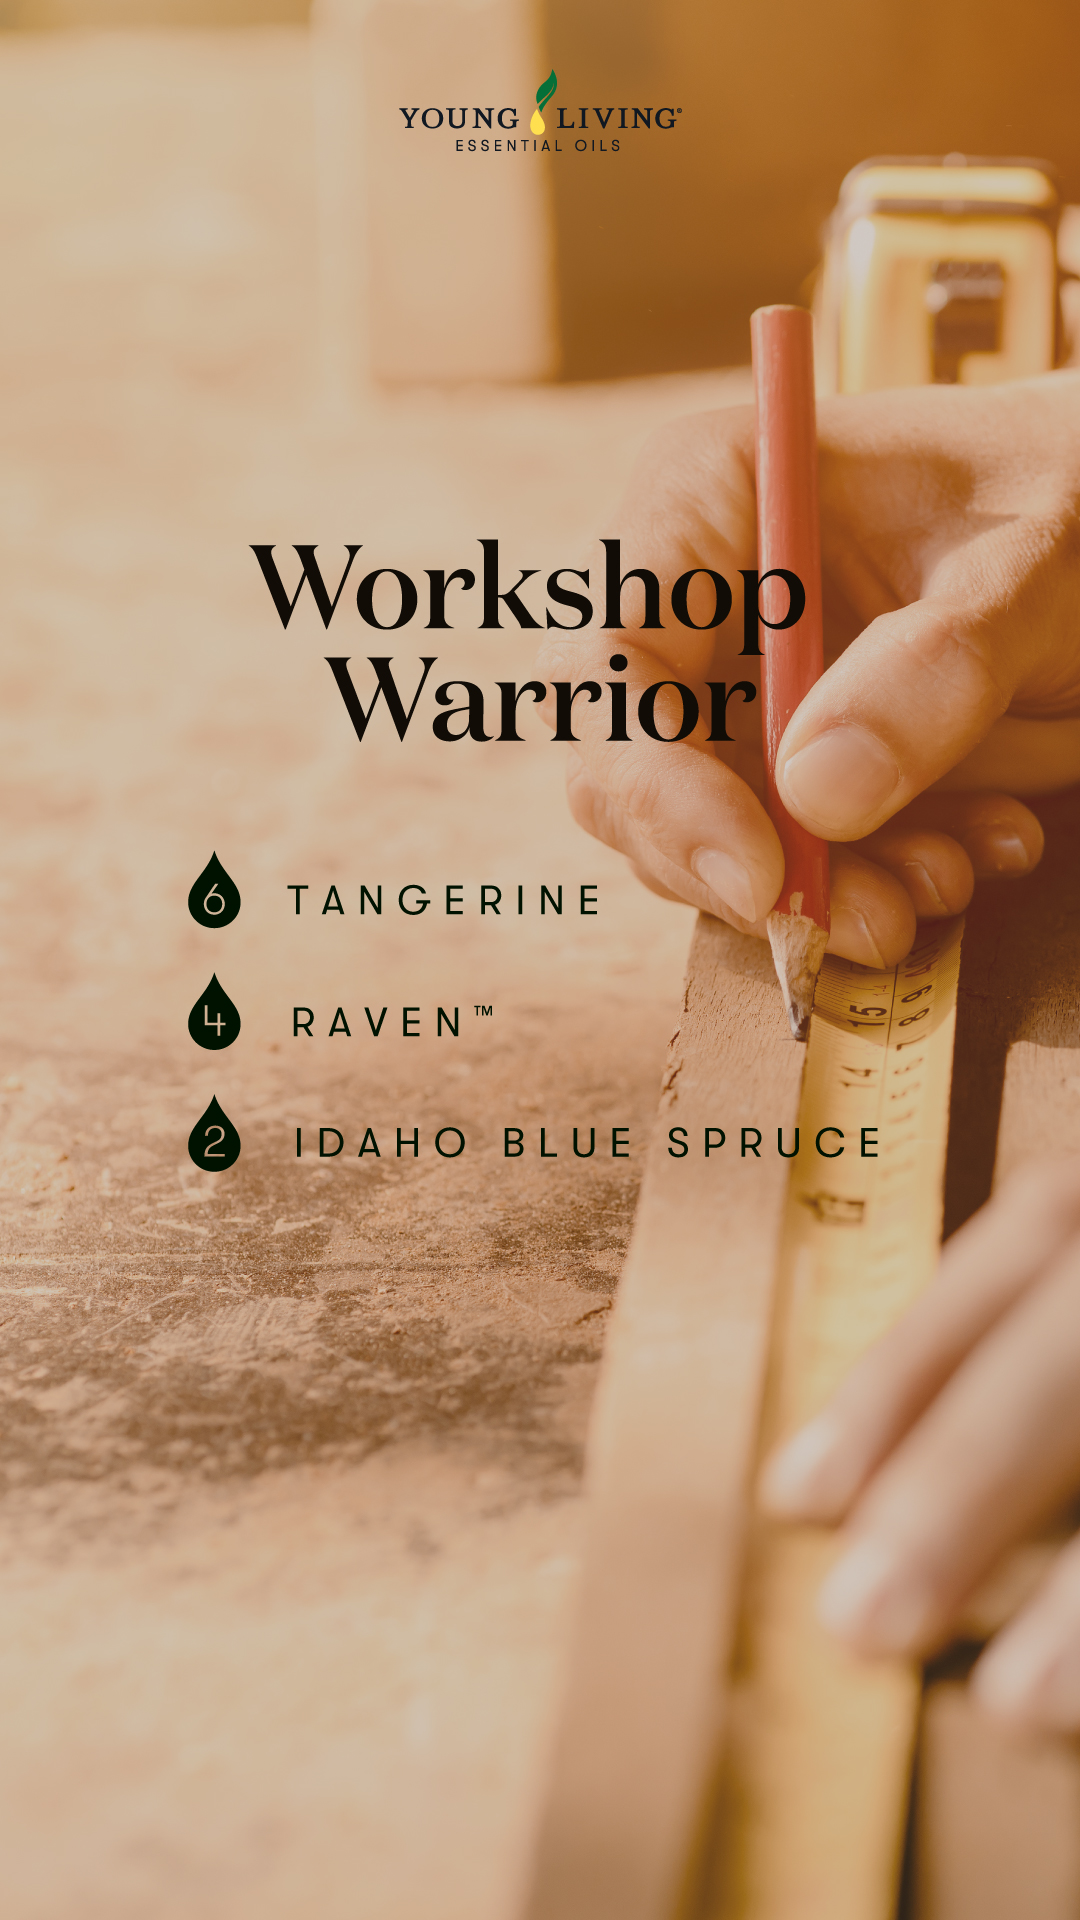 Workshop Warrior - •6 drops Tangerine •4 drops Raven™ •2 drops Idaho Blue Spruce - Young Living Lavender Life Blog